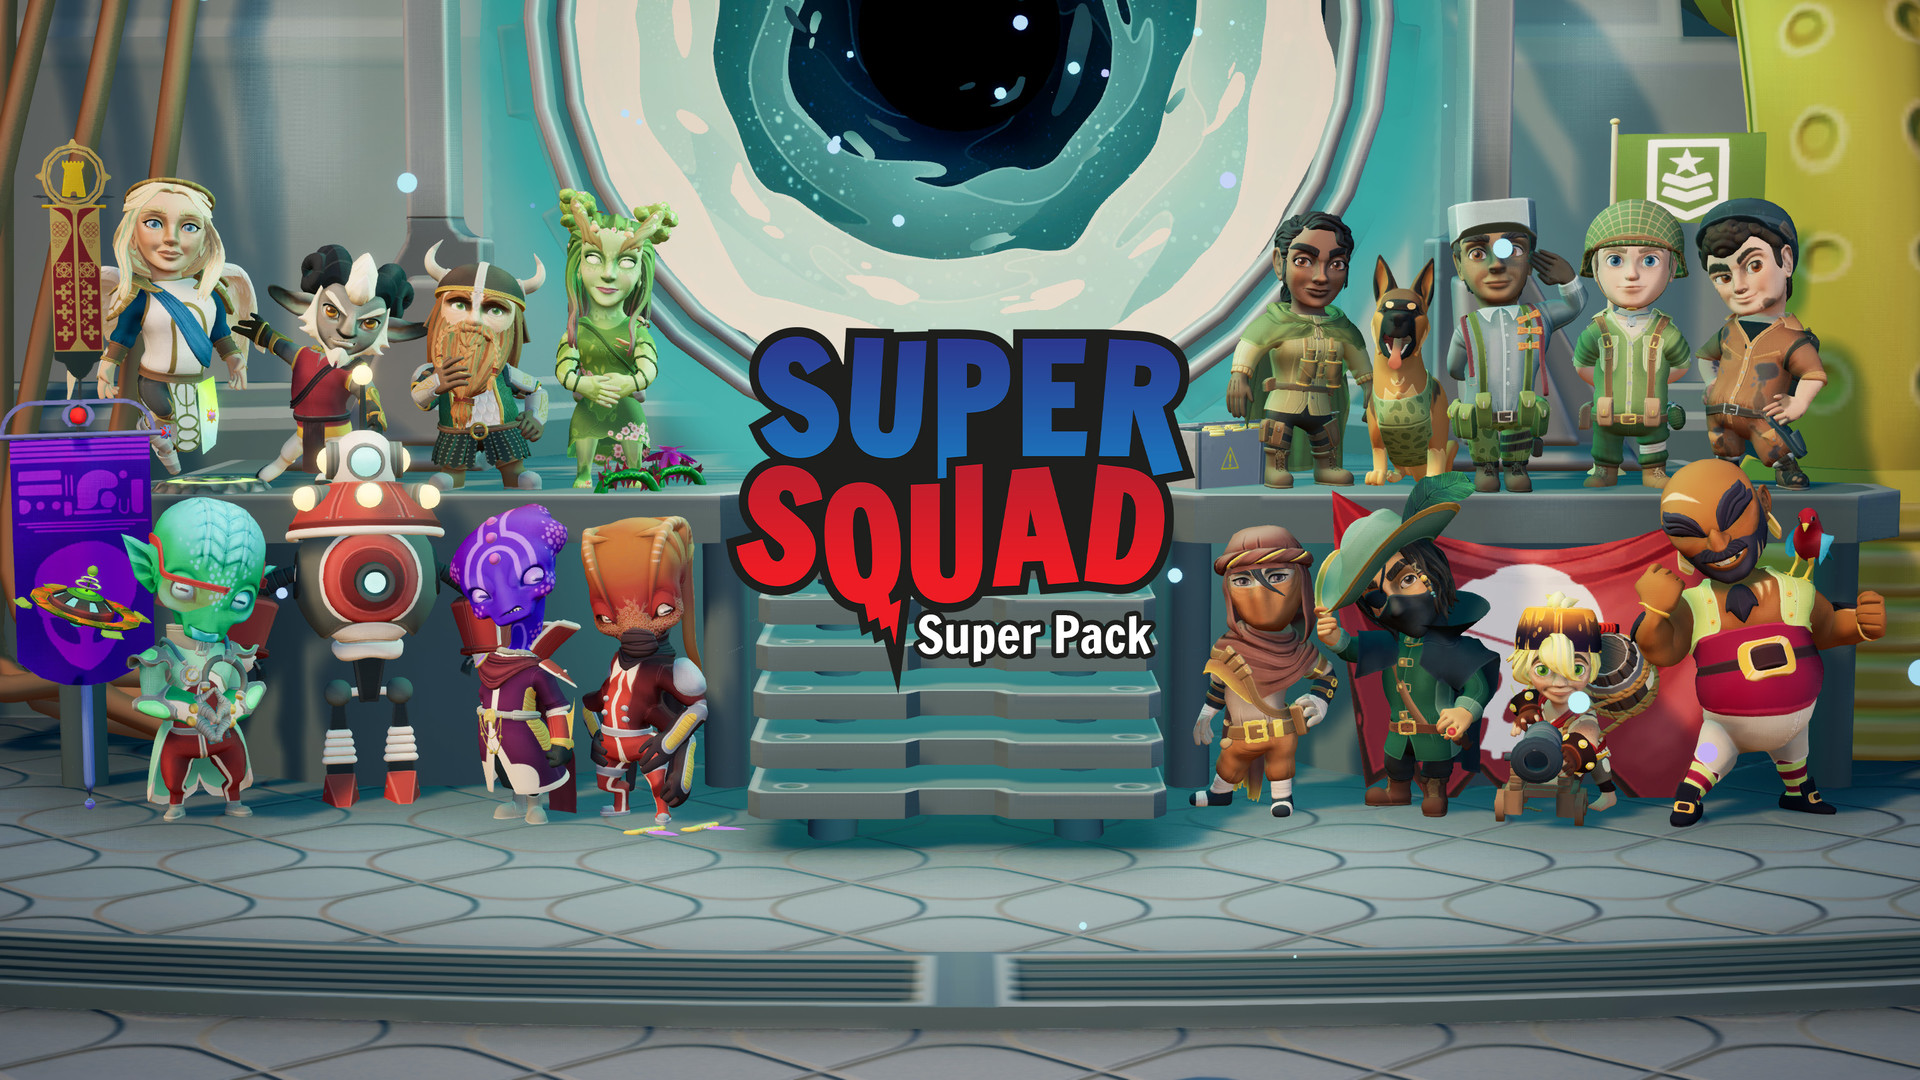 [$ 22.59] Super Squad - Super Pack DLC Steam CD Key